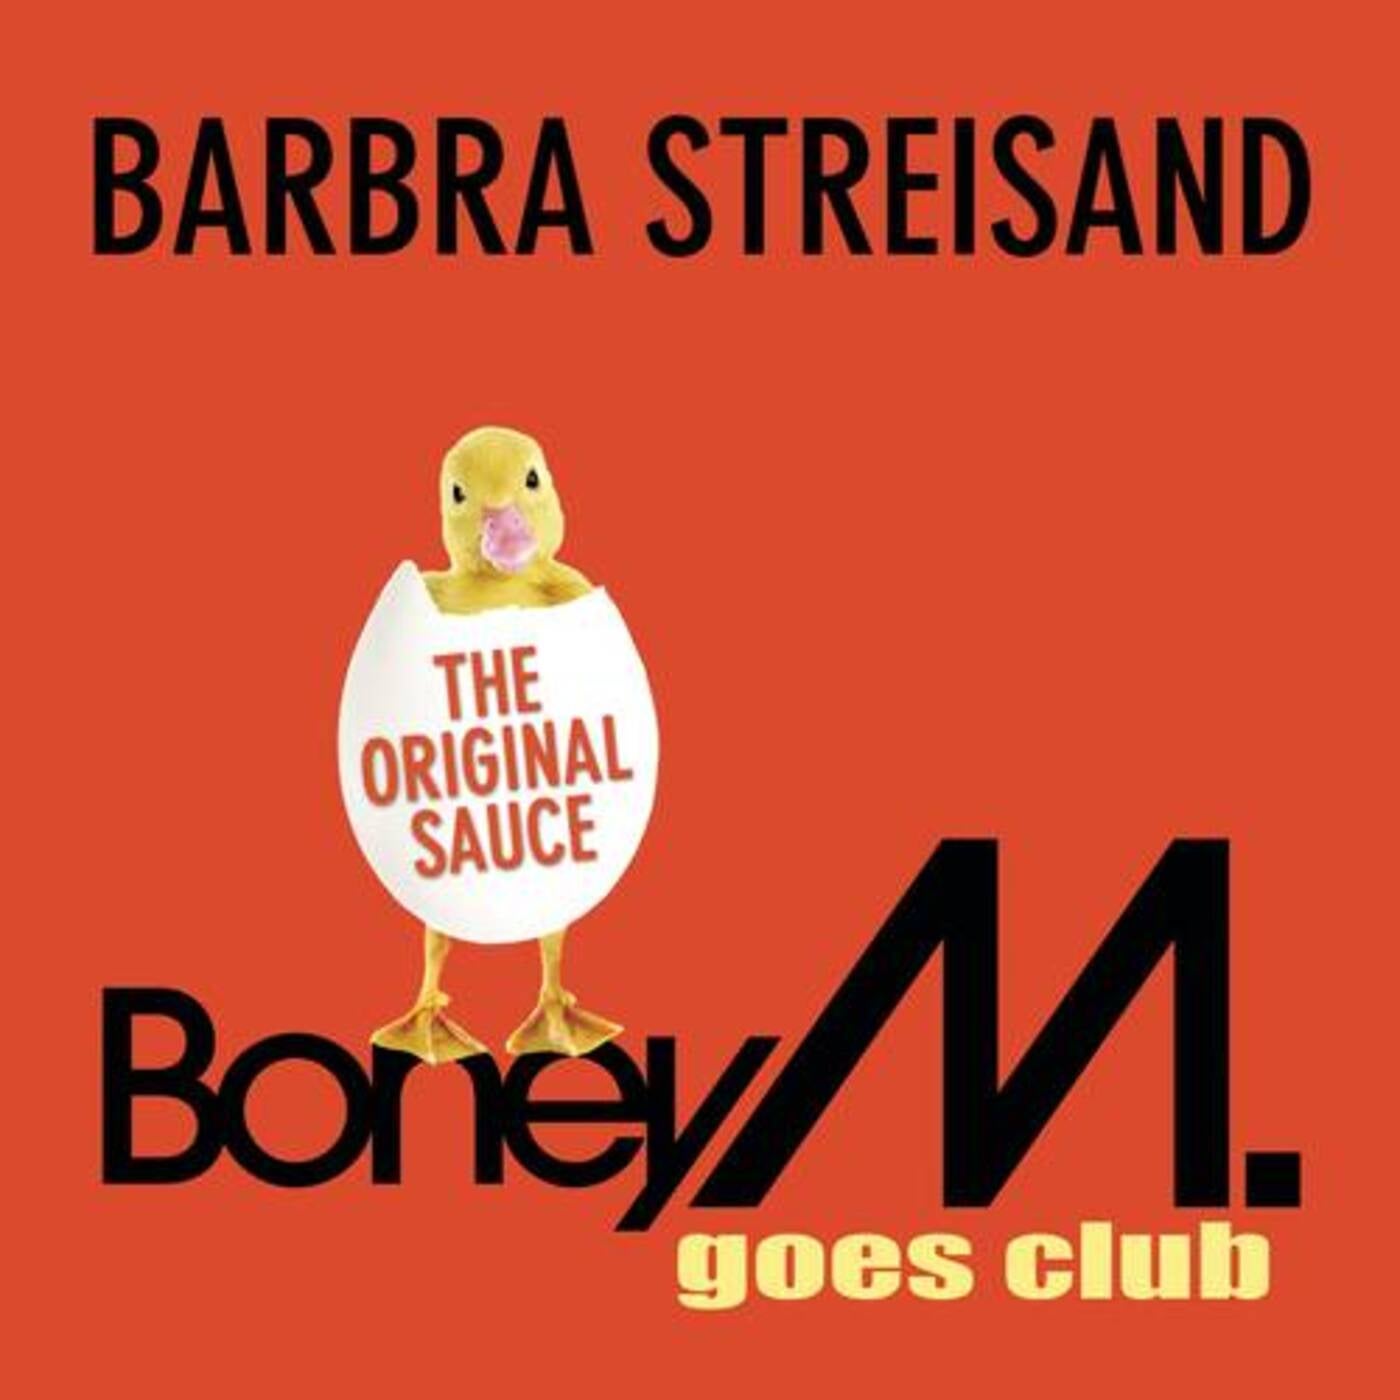 Duck sauce streisand. Boney m Barbra Streisand. Marilyn Monroe vs Barbra Streisand Boney m.. Duck Sauce Barbra Streisand. Barbra Streisand - Boney m. Mega Mashup-Mix - обложки альбомов.